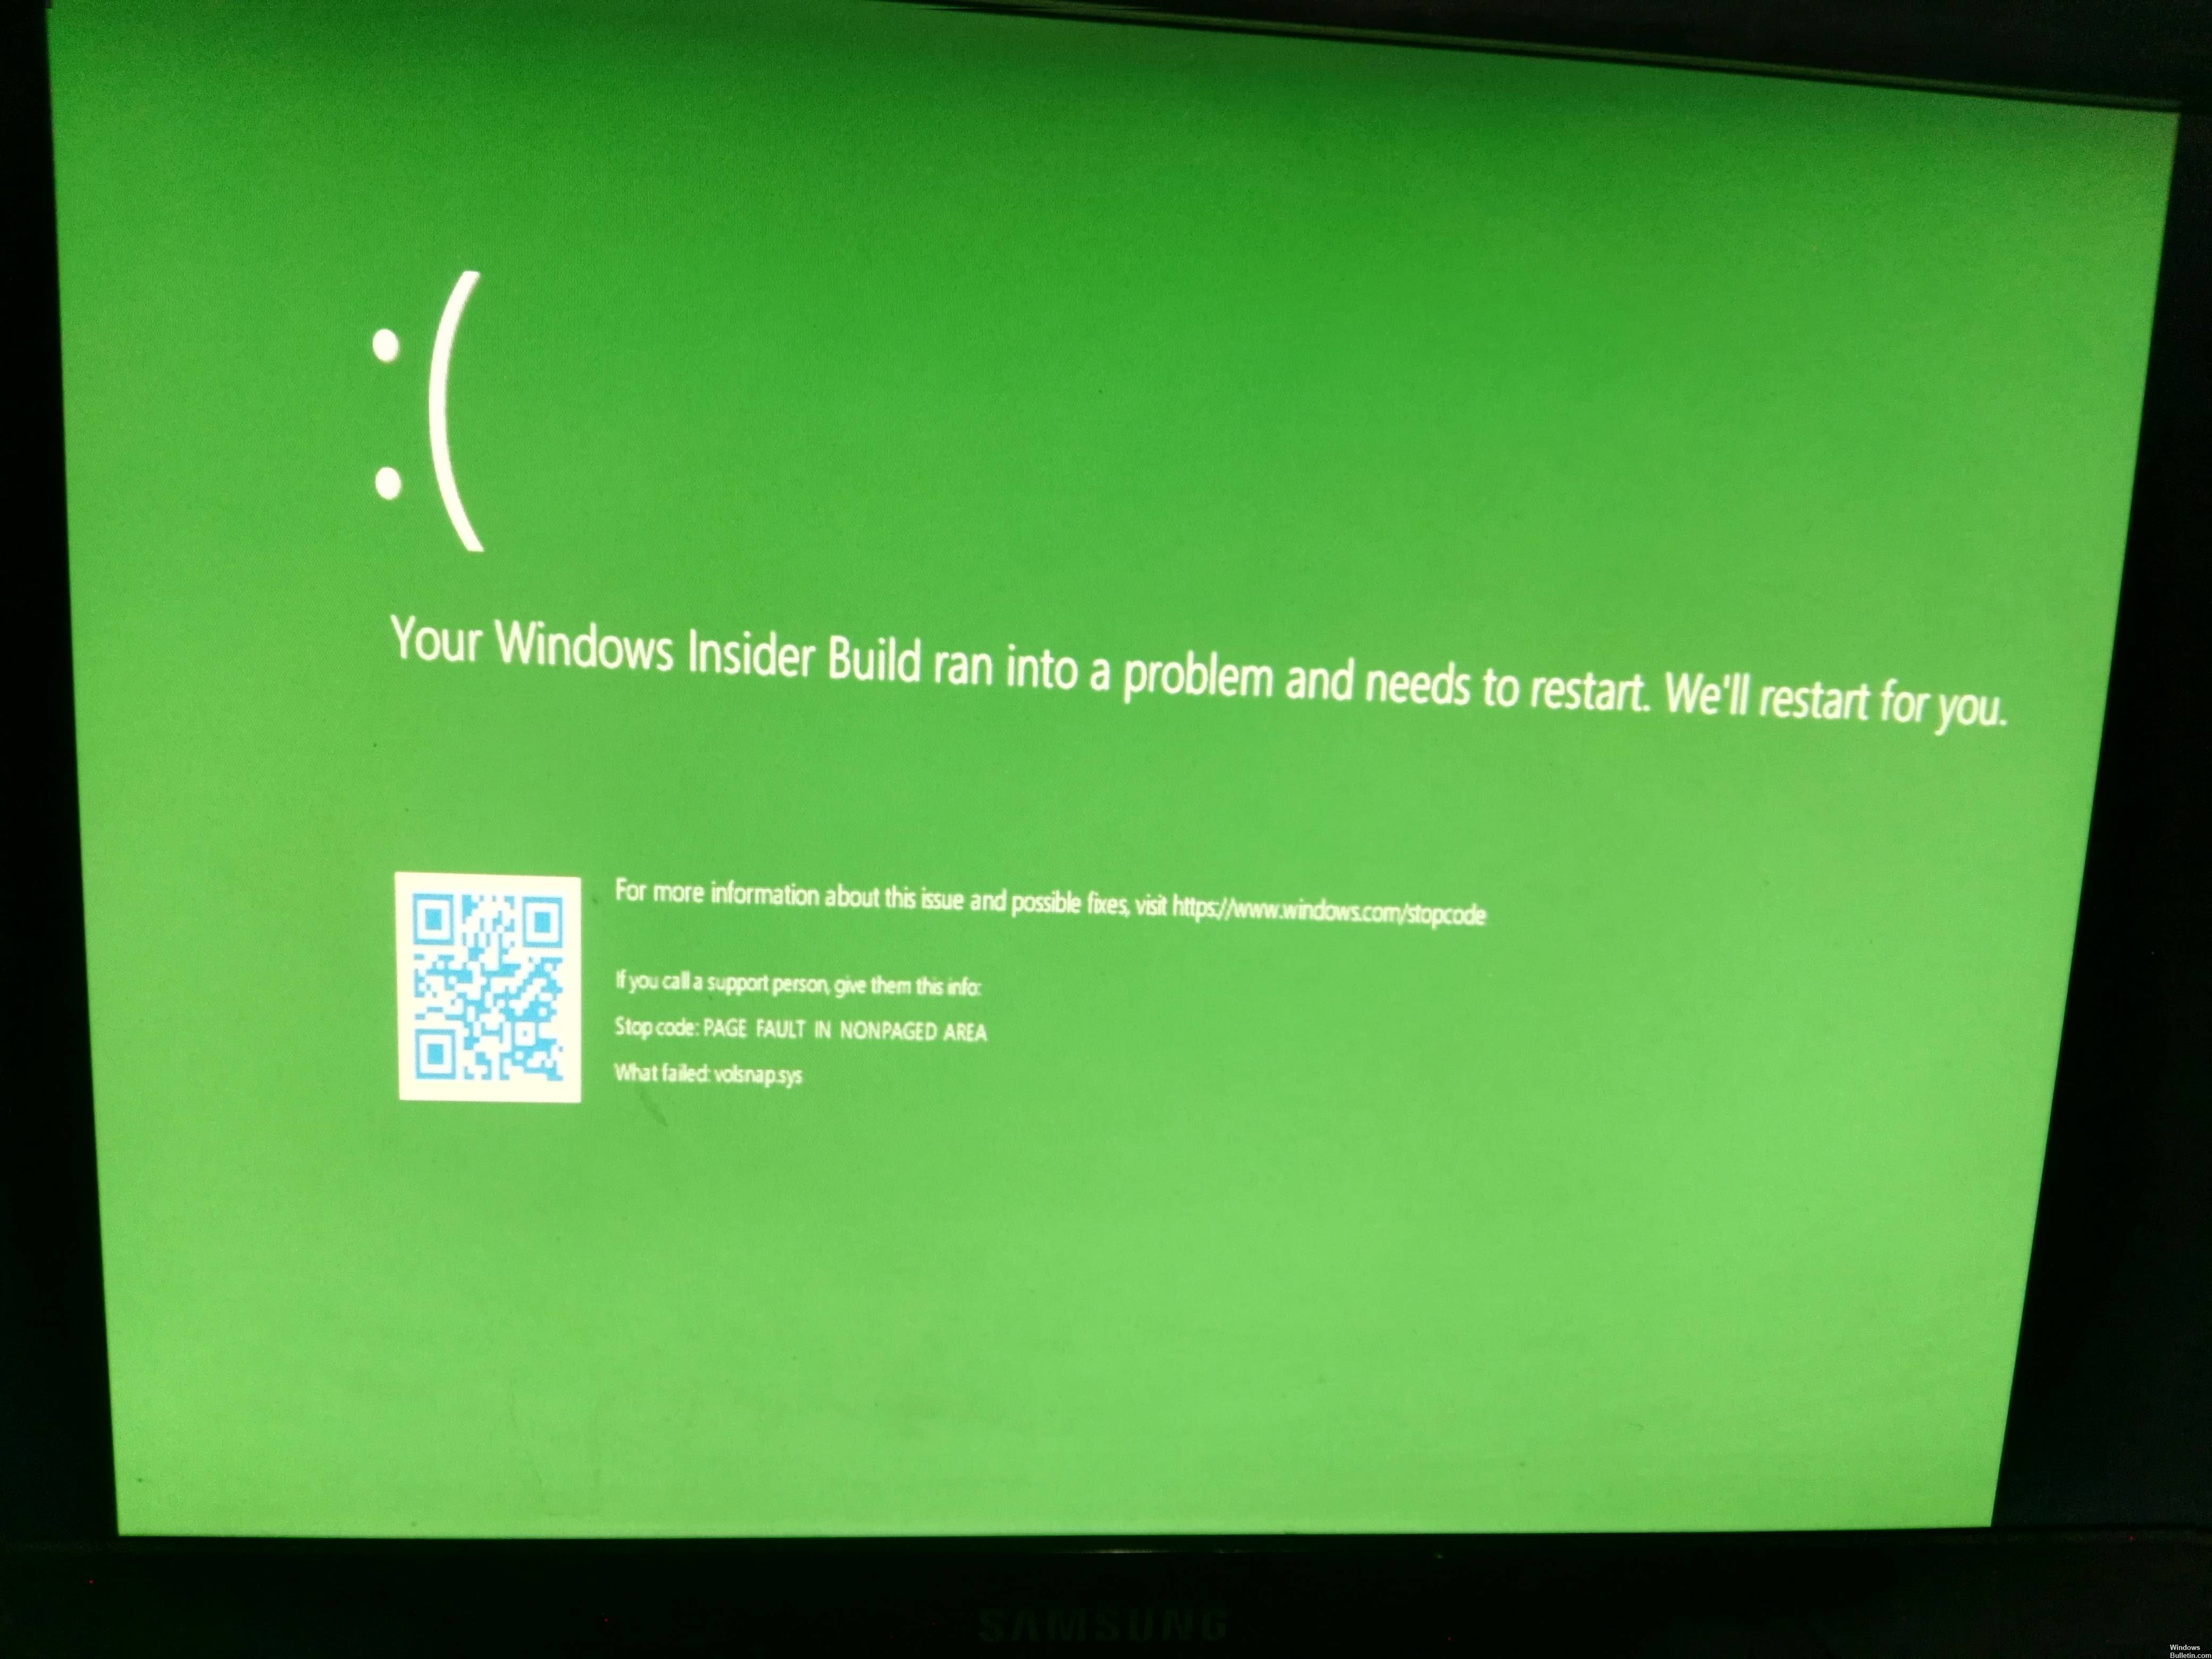 Синий экран page fault in nonpaged. Синий экран смерти Windows. Page Fault in NONPAGED area Windows 10. Игра BSOD. Ошибка виндовс зеленый экран.